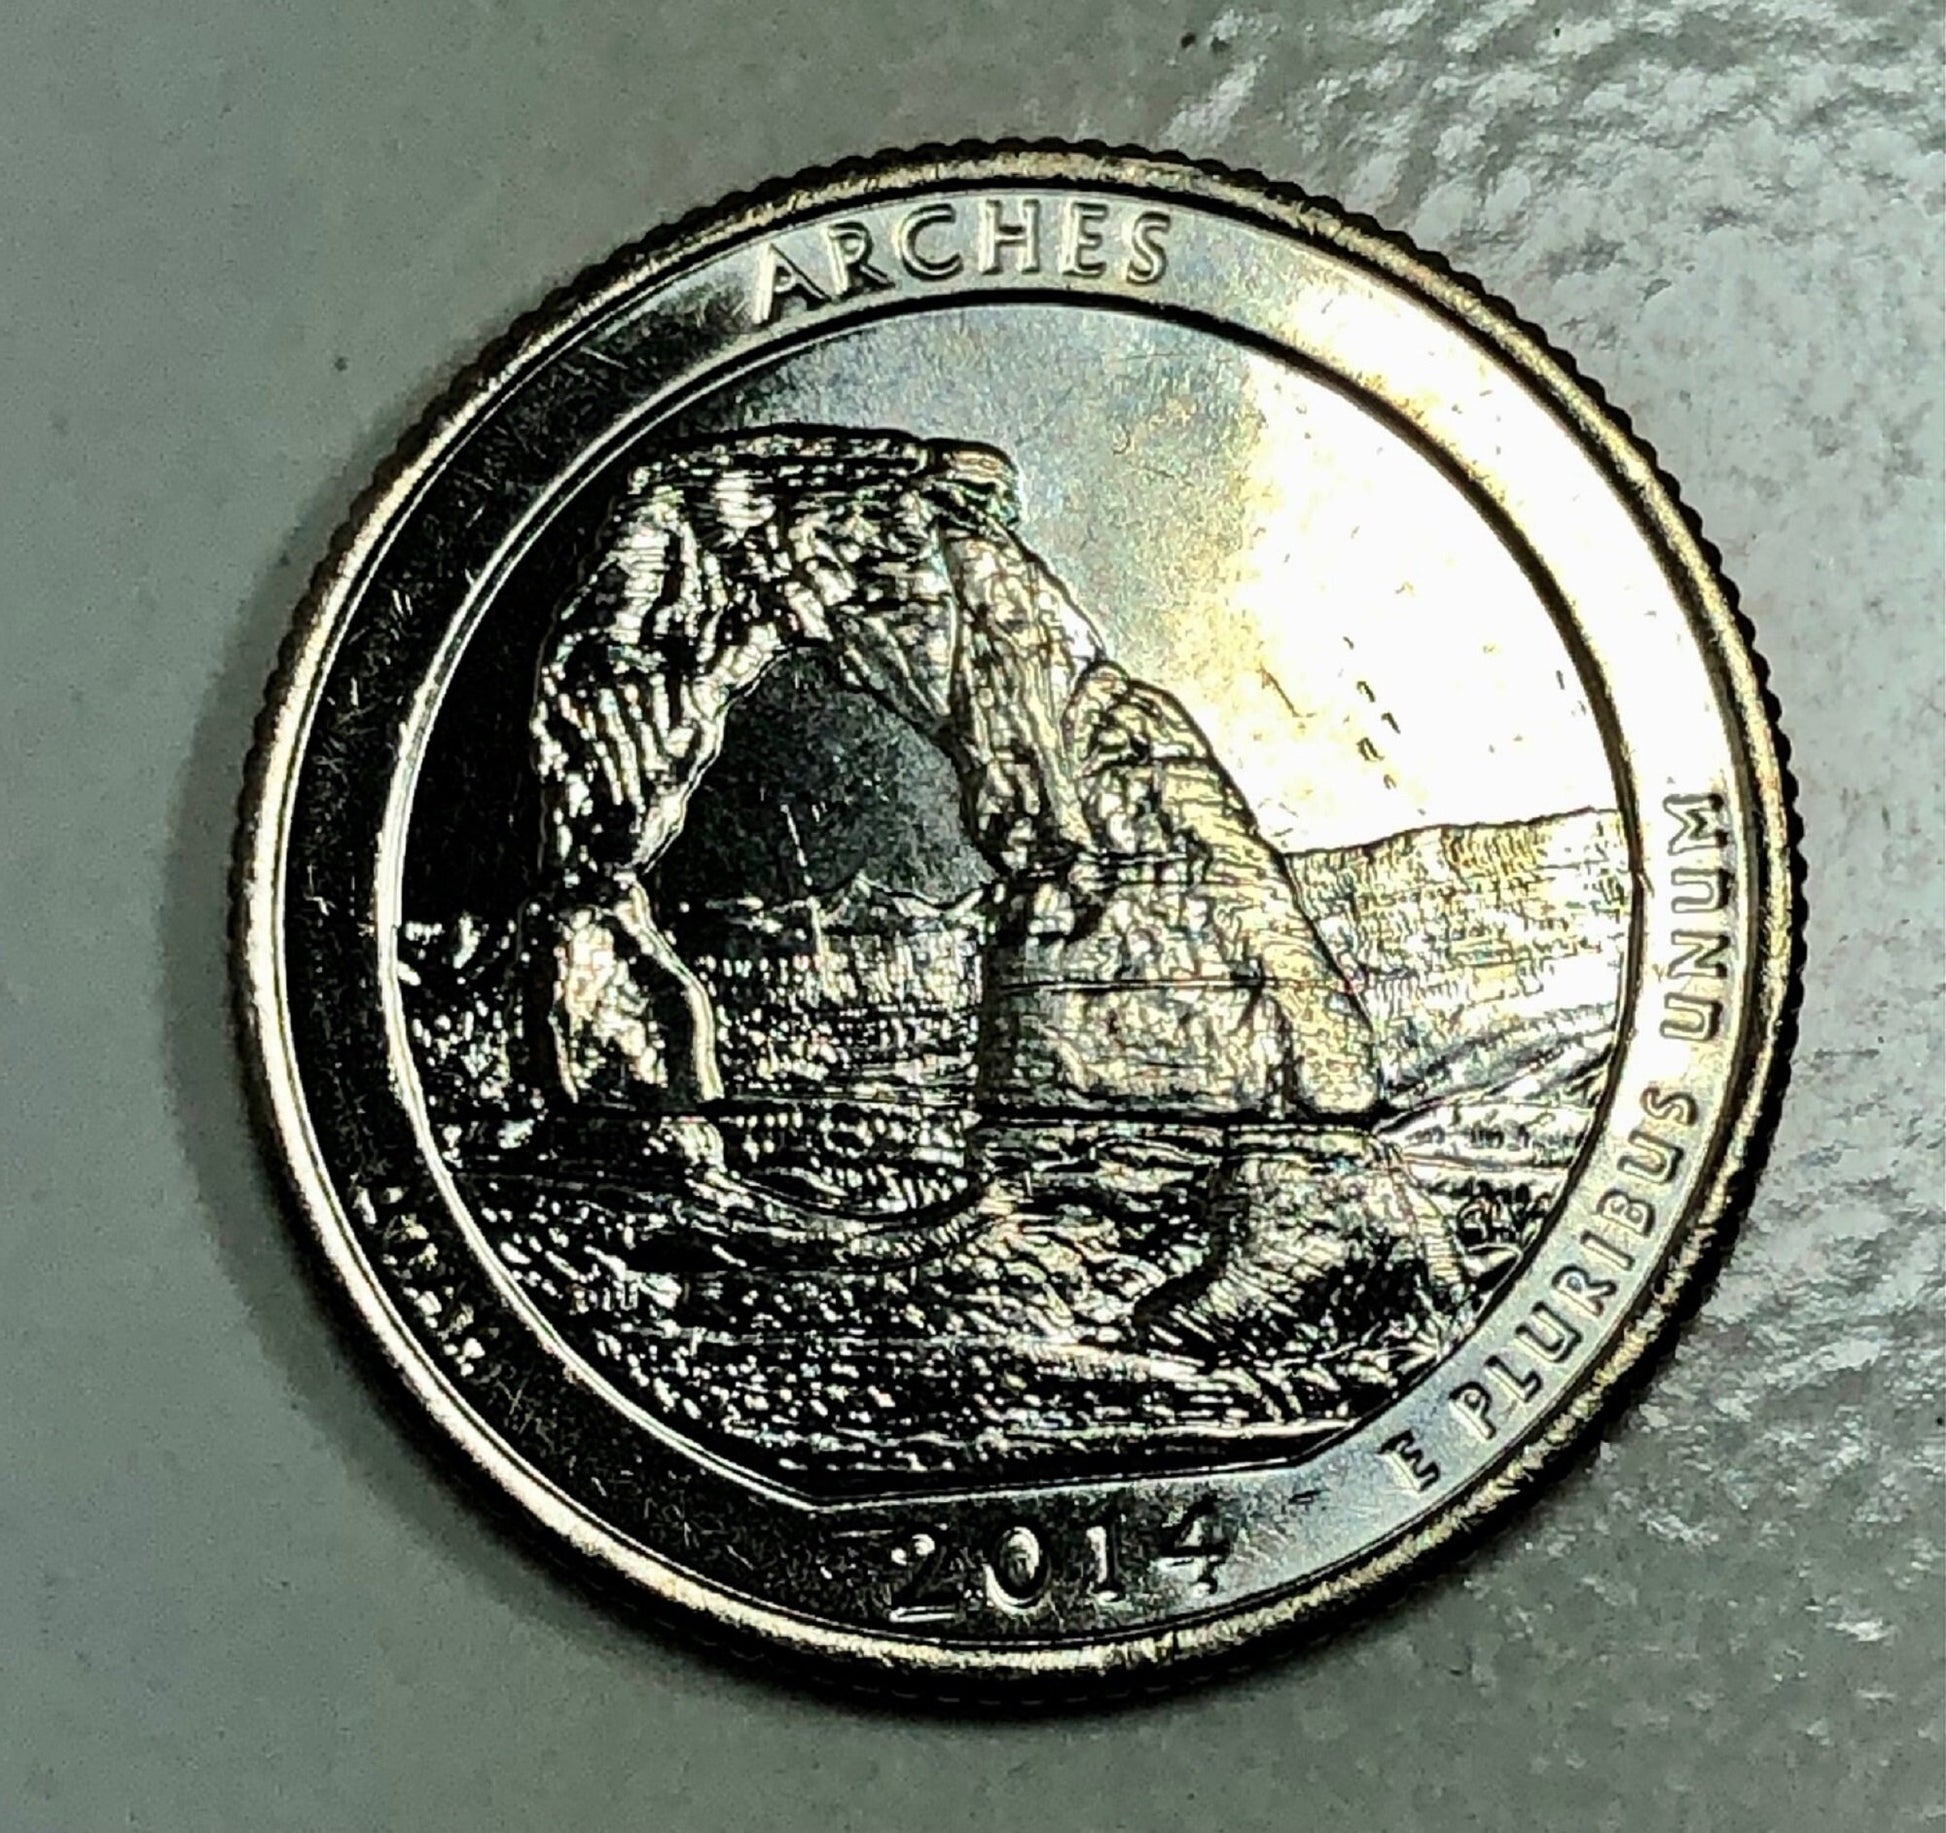 USA Ring Utah Arches National Park Quarter Coin Ring